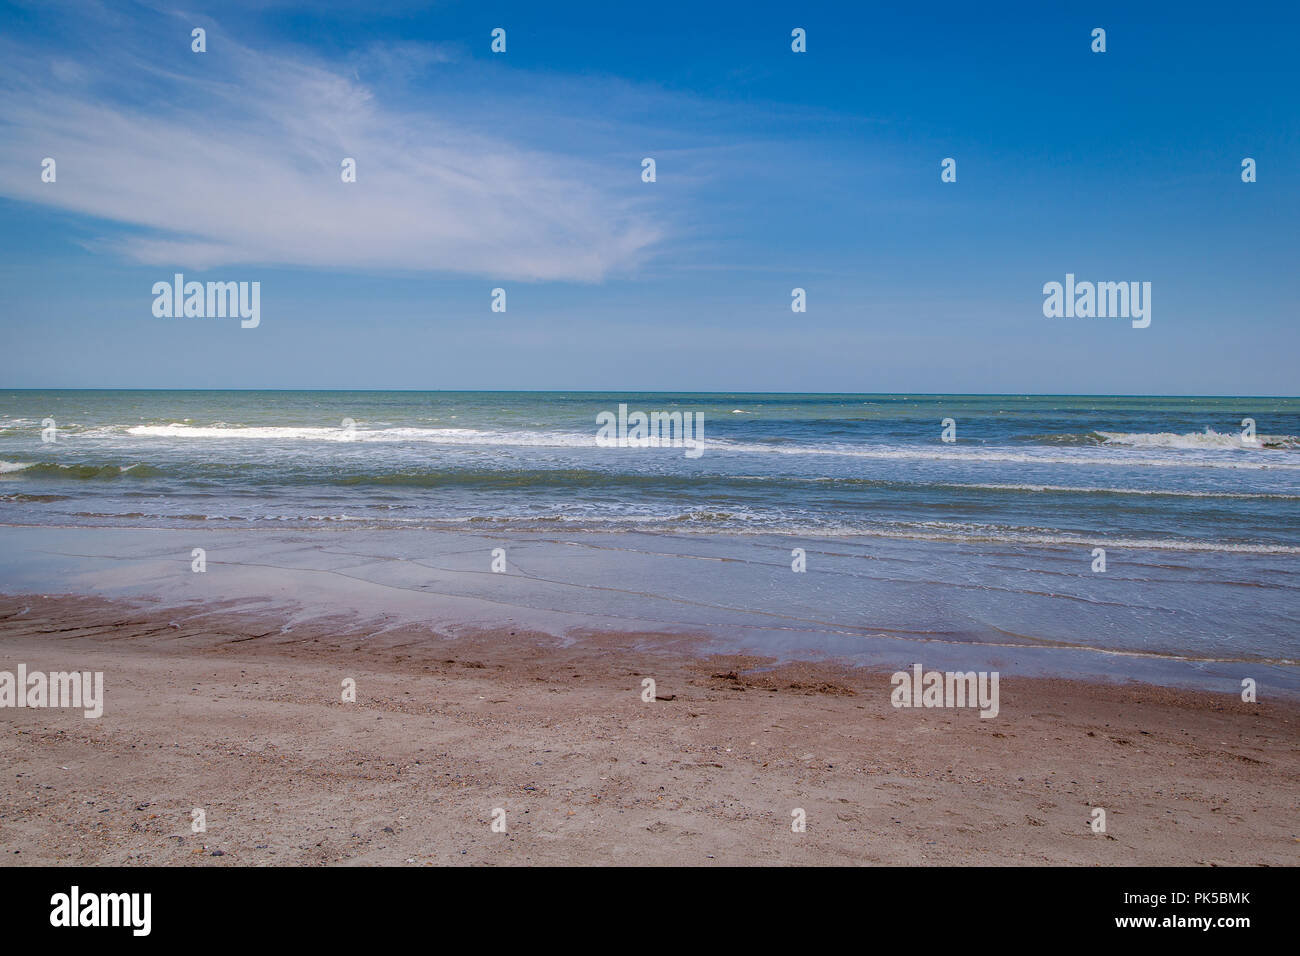 waves splashing on the beach at Amelia Island. Stock Photo